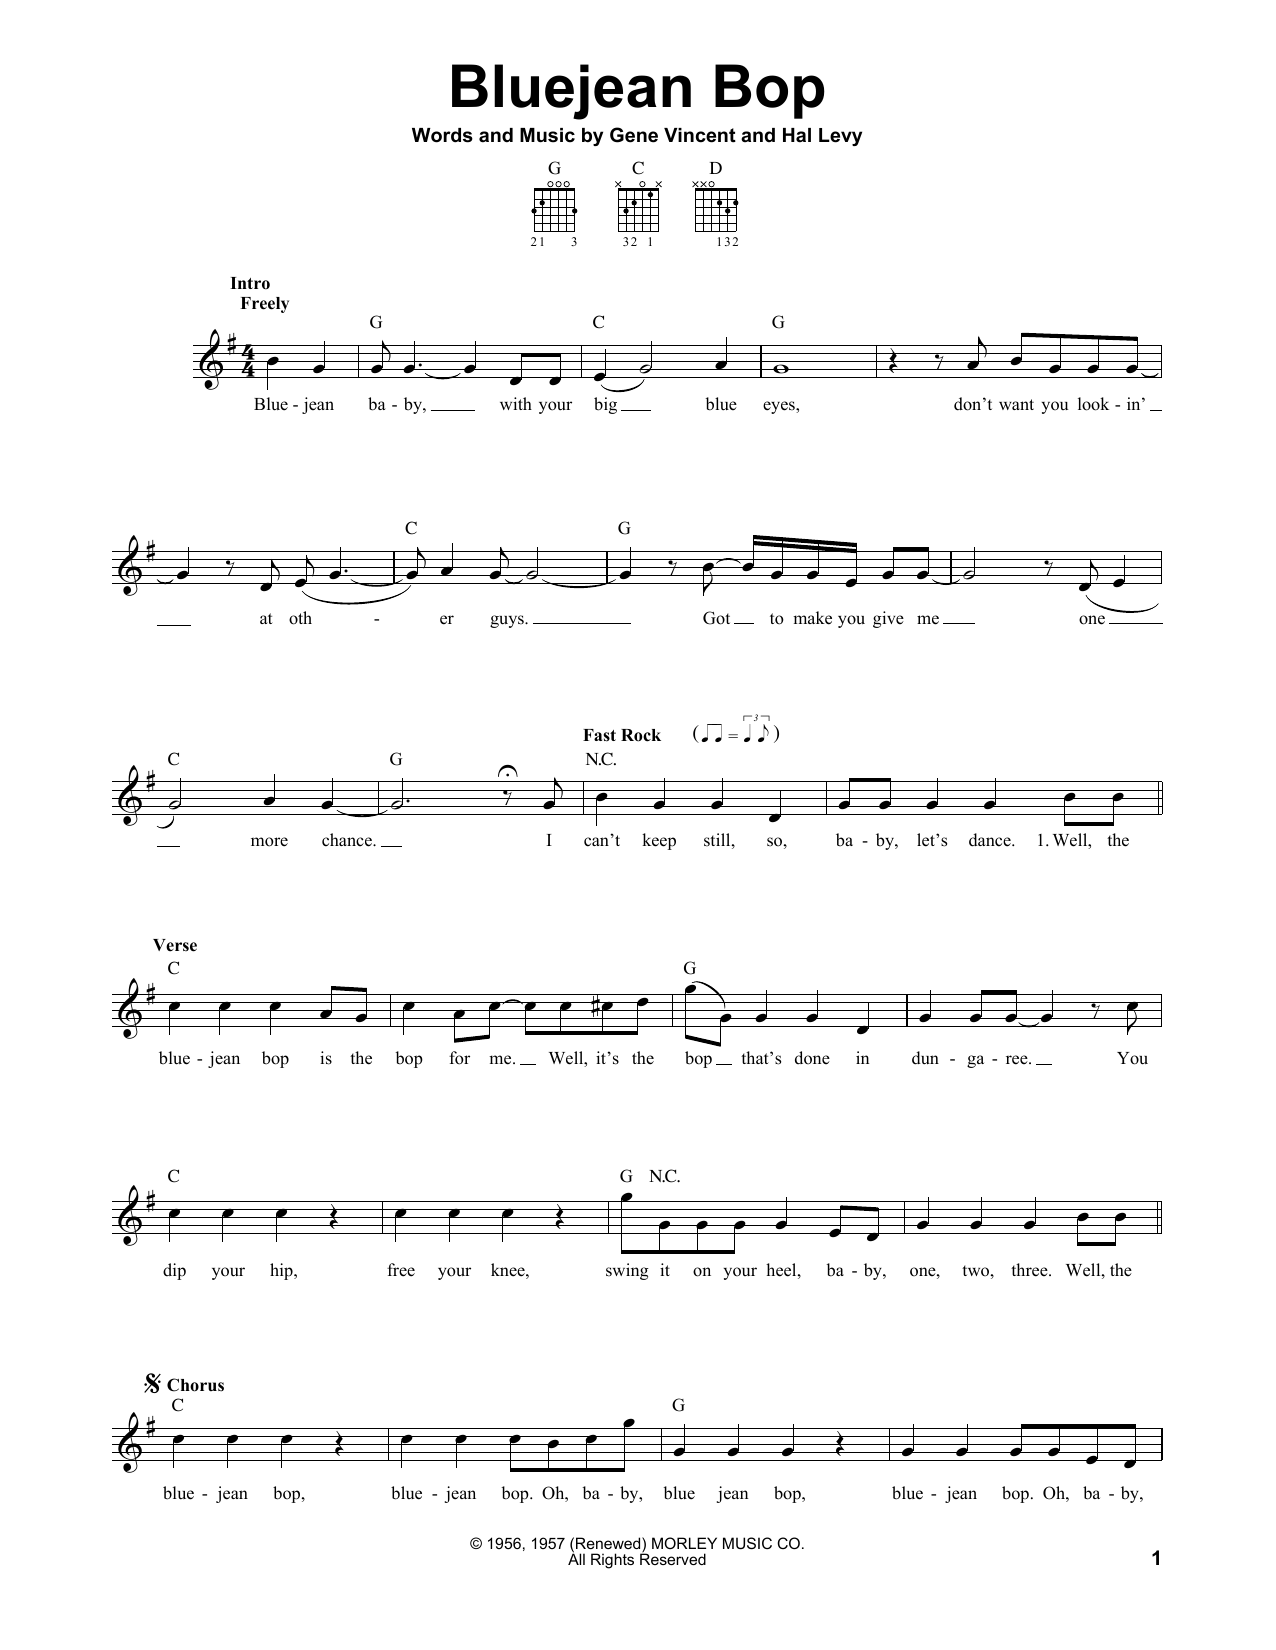 Paul McCartney Bluejean Bop Sheet Music Notes & Chords for Melody Line, Lyrics & Chords - Download or Print PDF